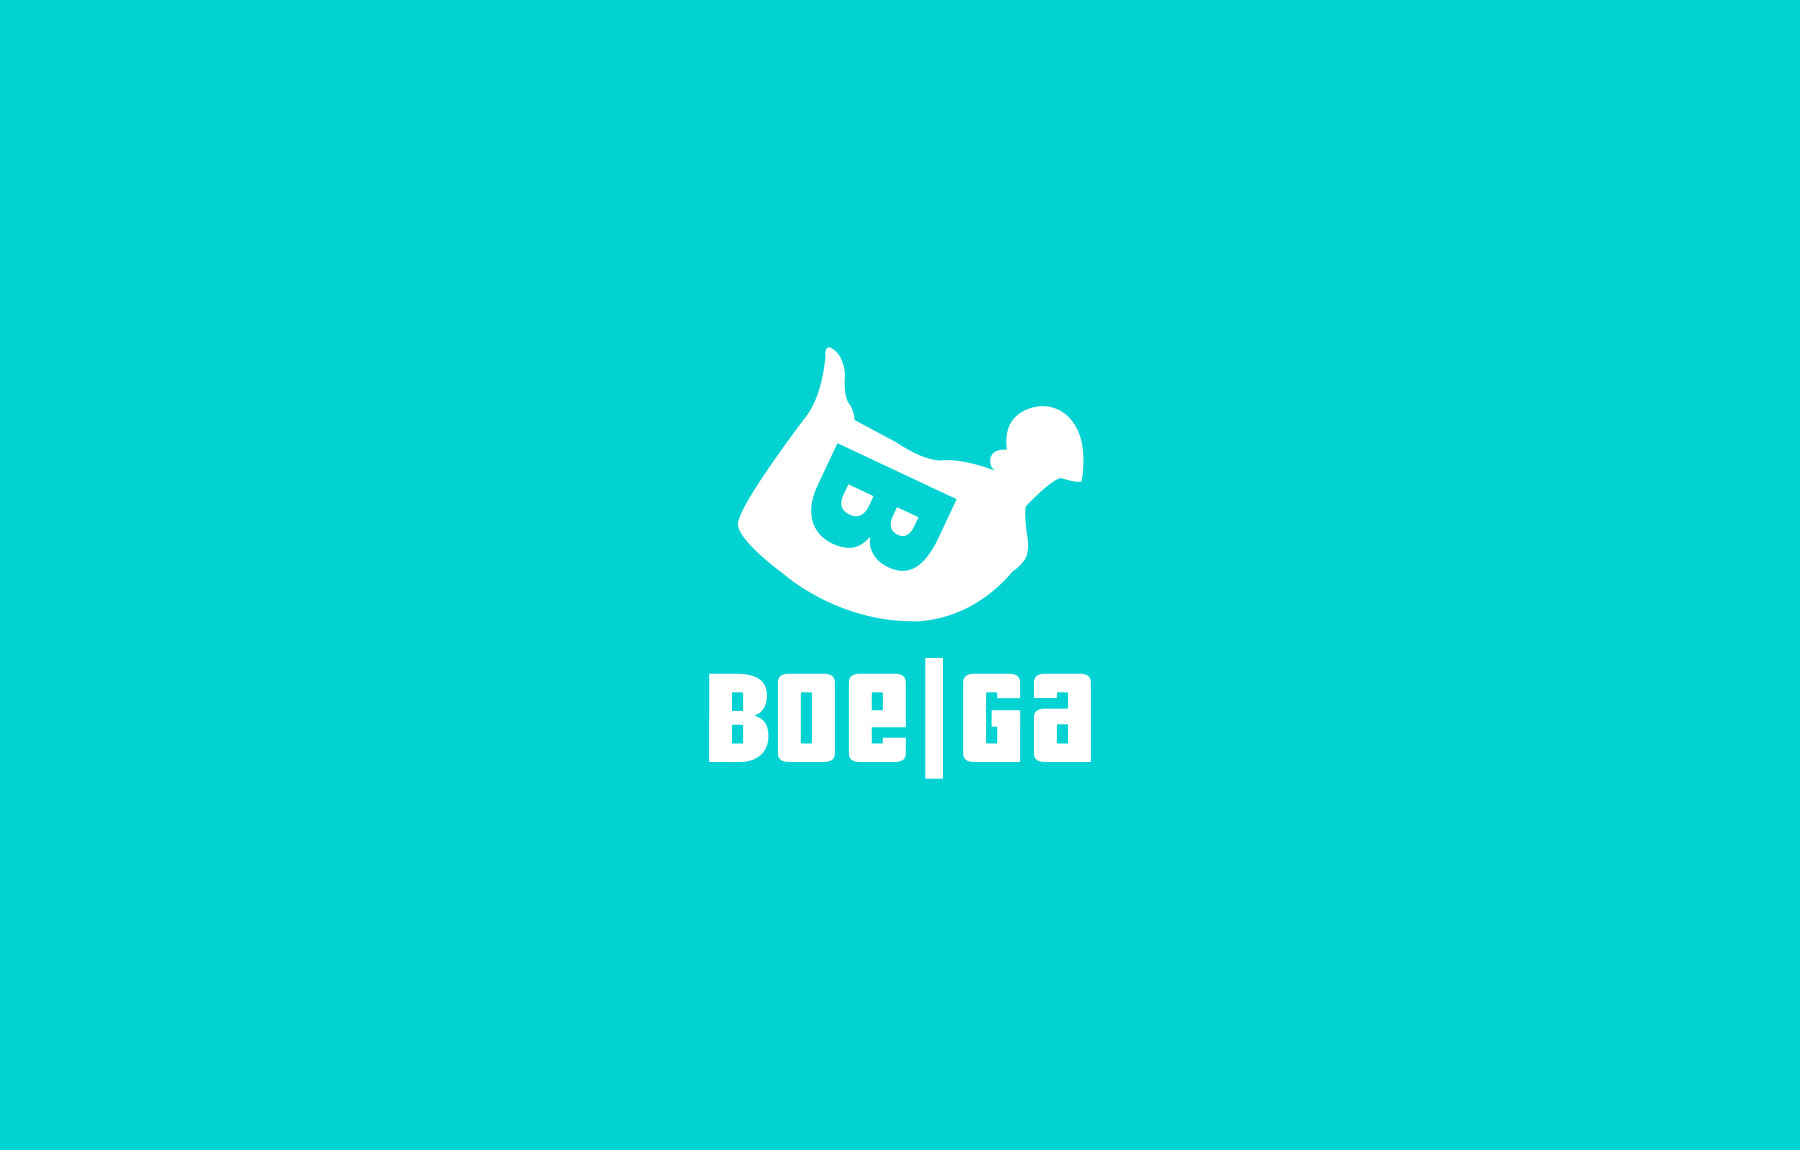 Boega Yoga company logo